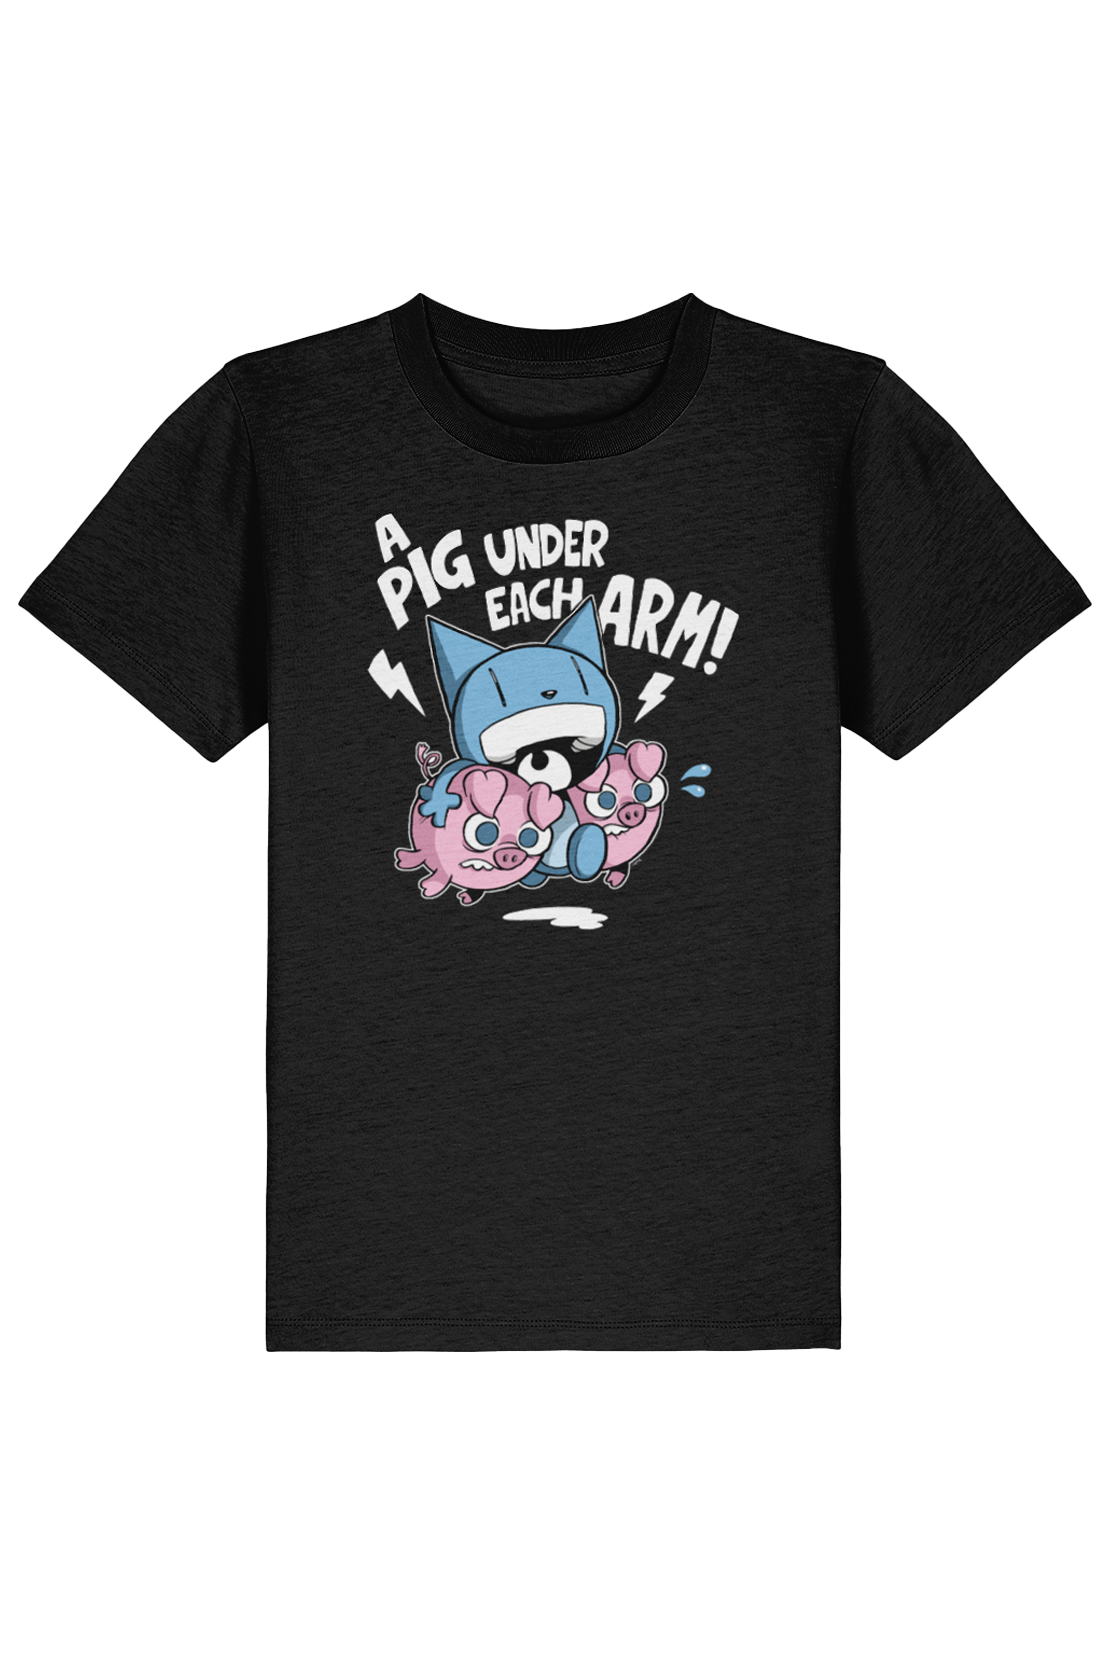 Looshkin "A pig under each arm!" kids t-shirt